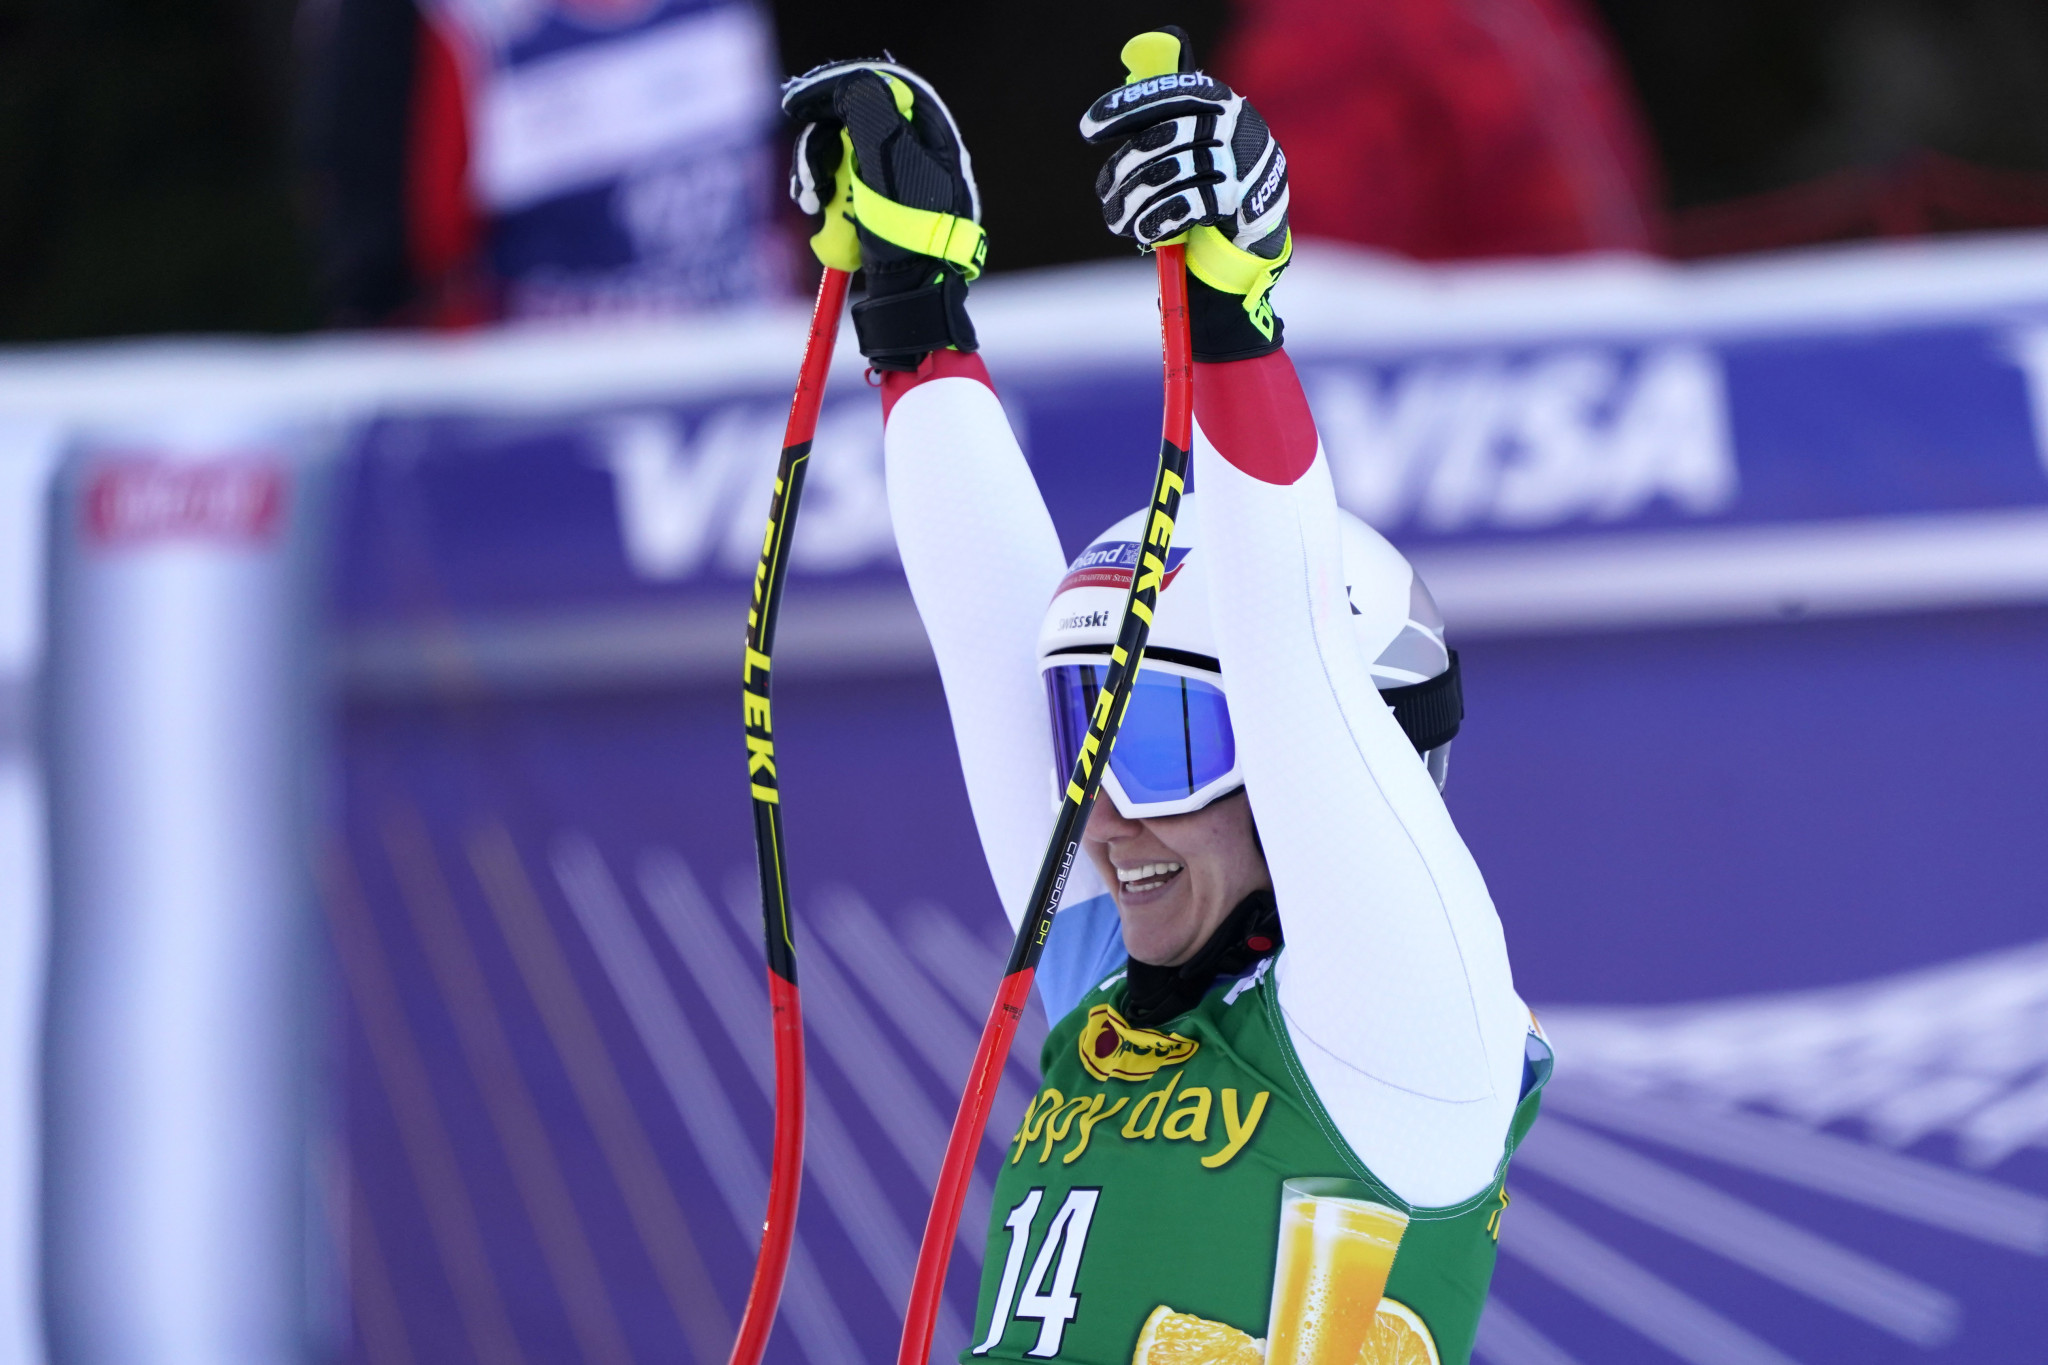 Joana Haehlen of Switzerland managed her first World Cup podium finish ©Getty Images